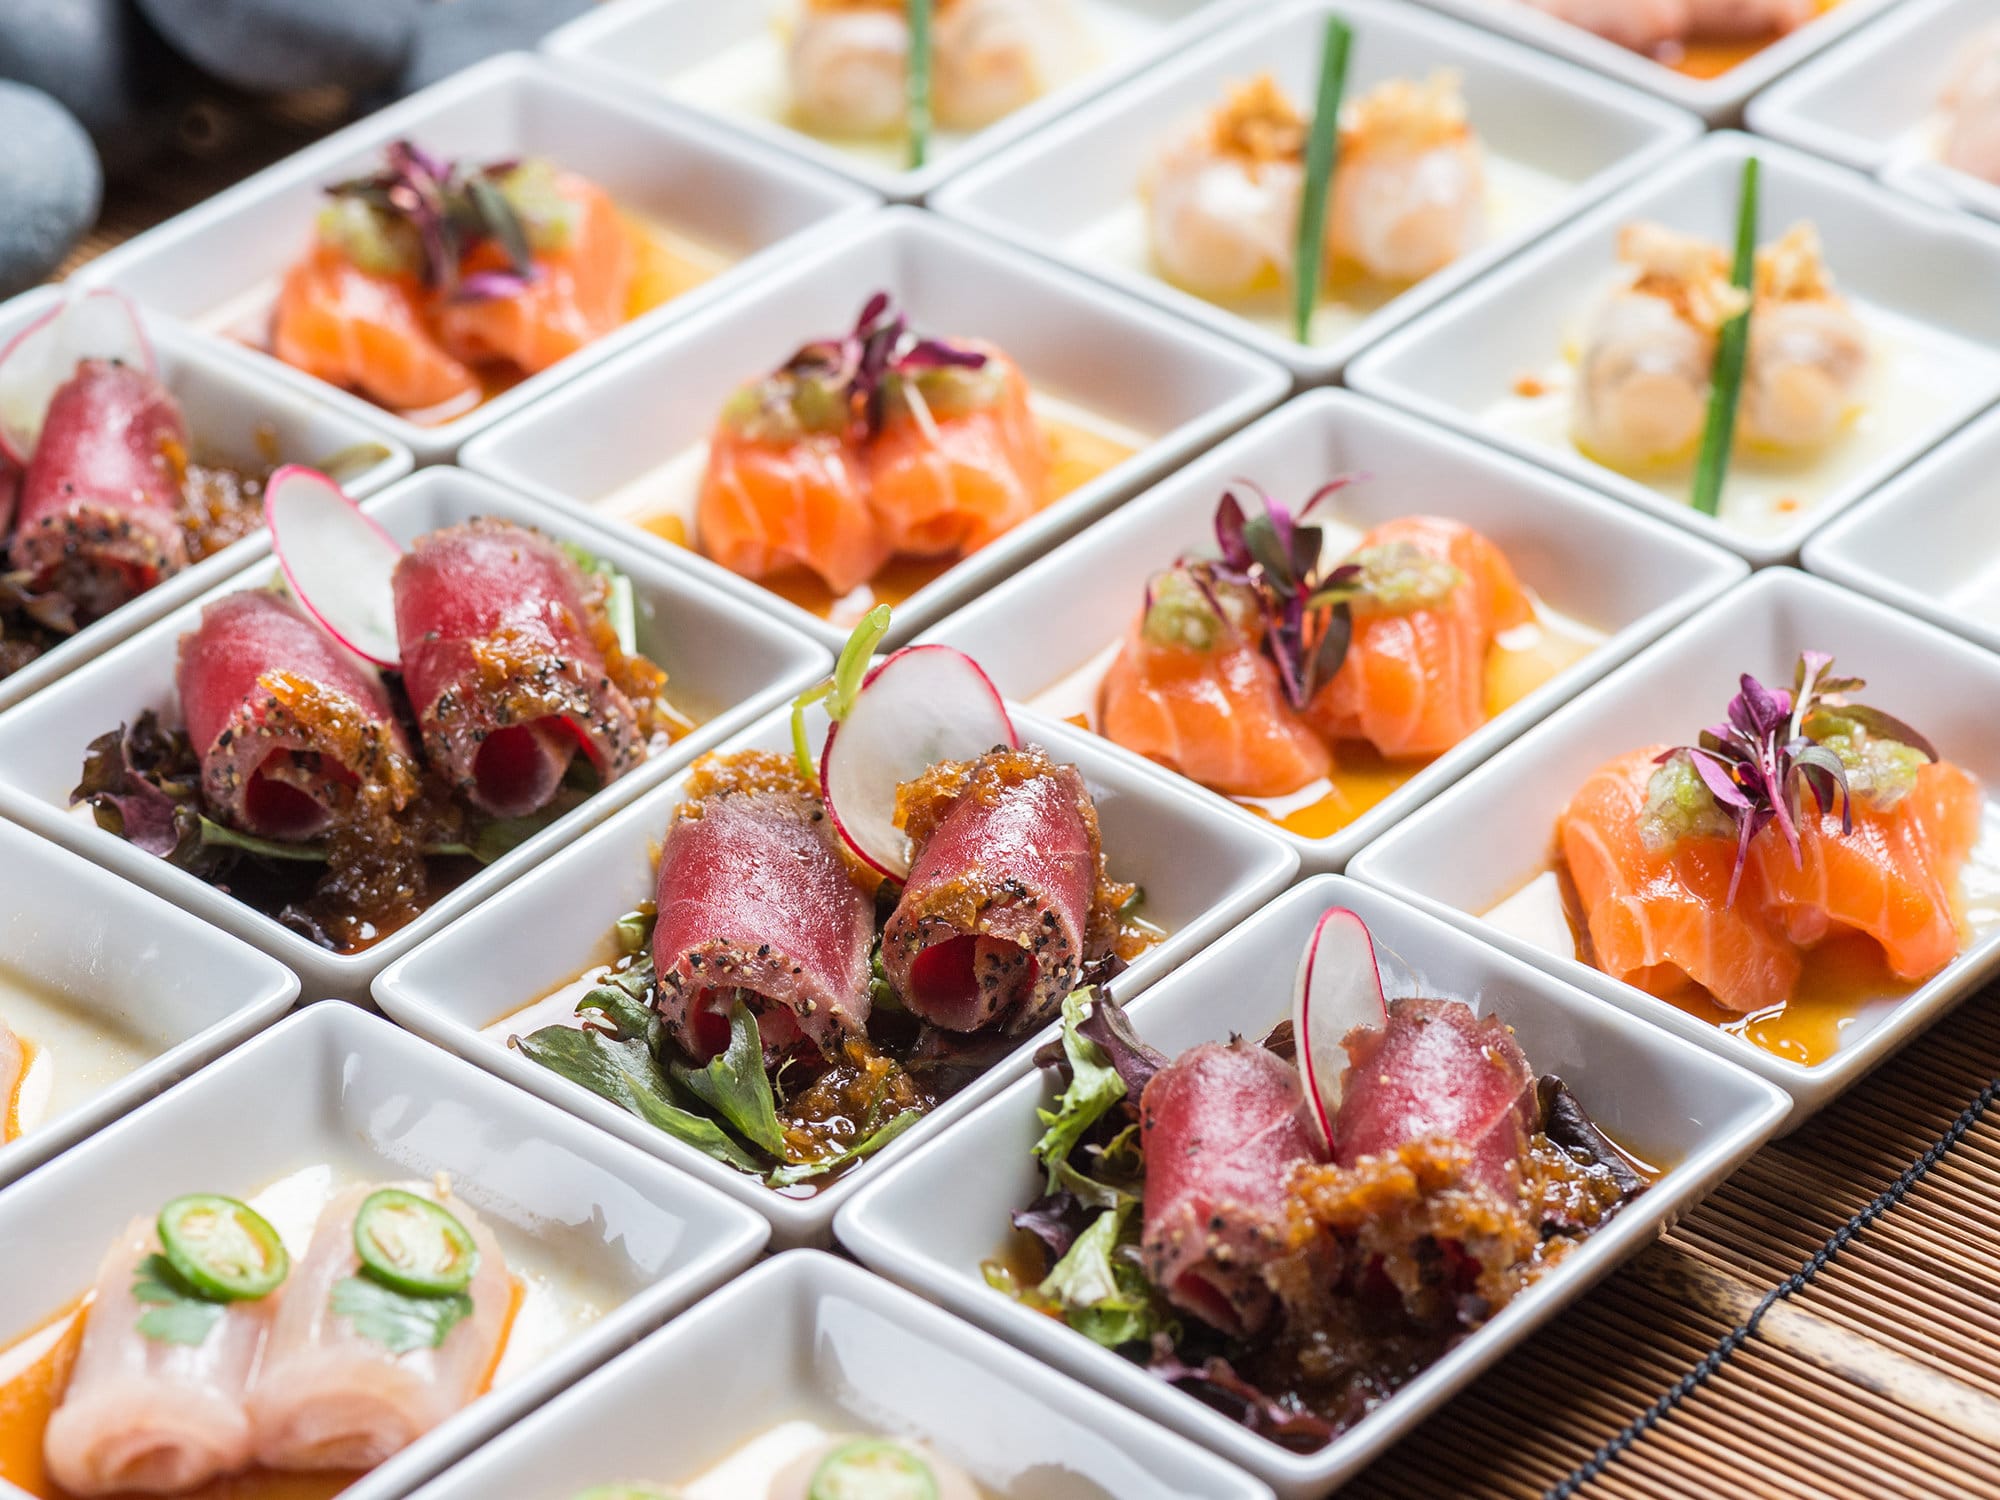 Sashimi plates